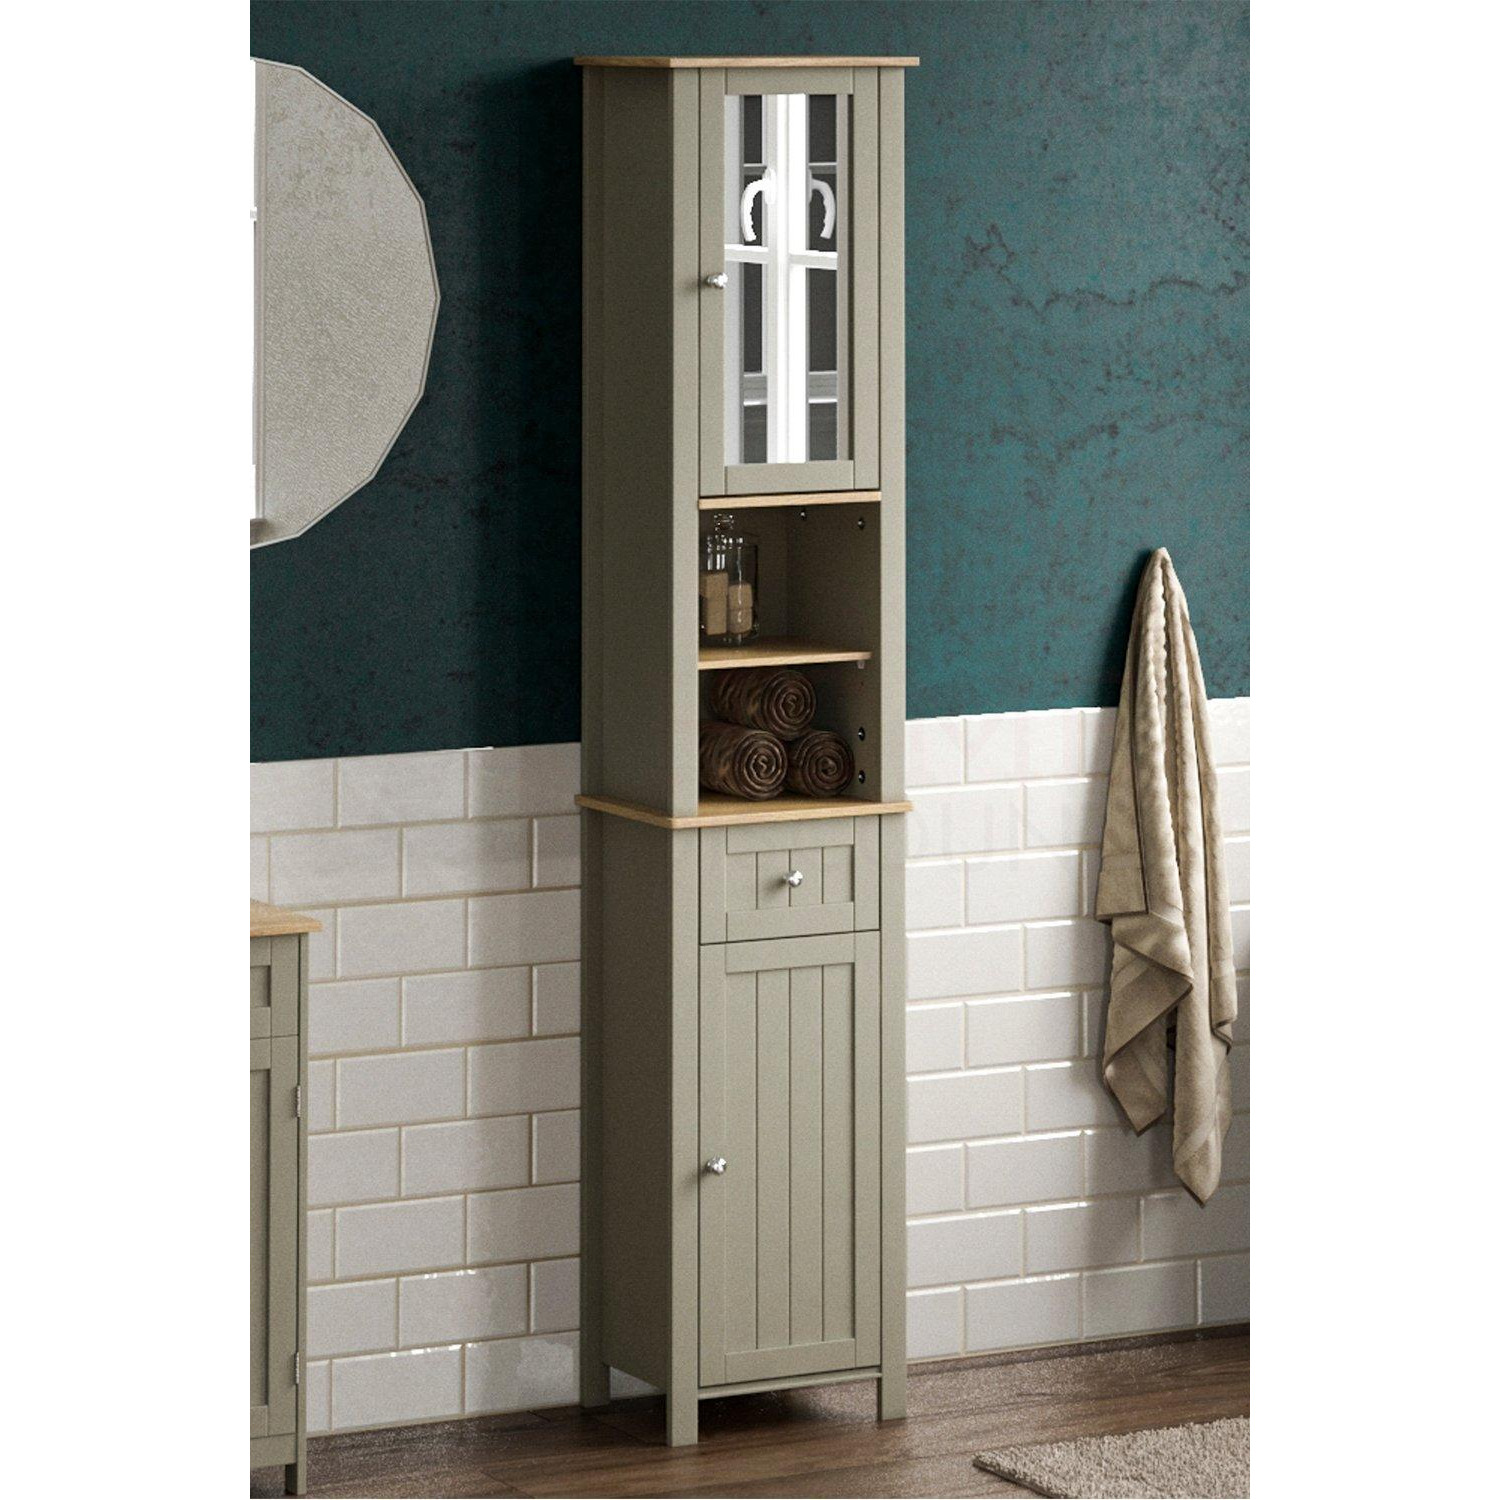 Bath Vida Priano Mirrored 2 Door 1 Drawer With Shelves Tall Cabinet Bathroom Storage 1900 x 400 x 300 mm - image 1